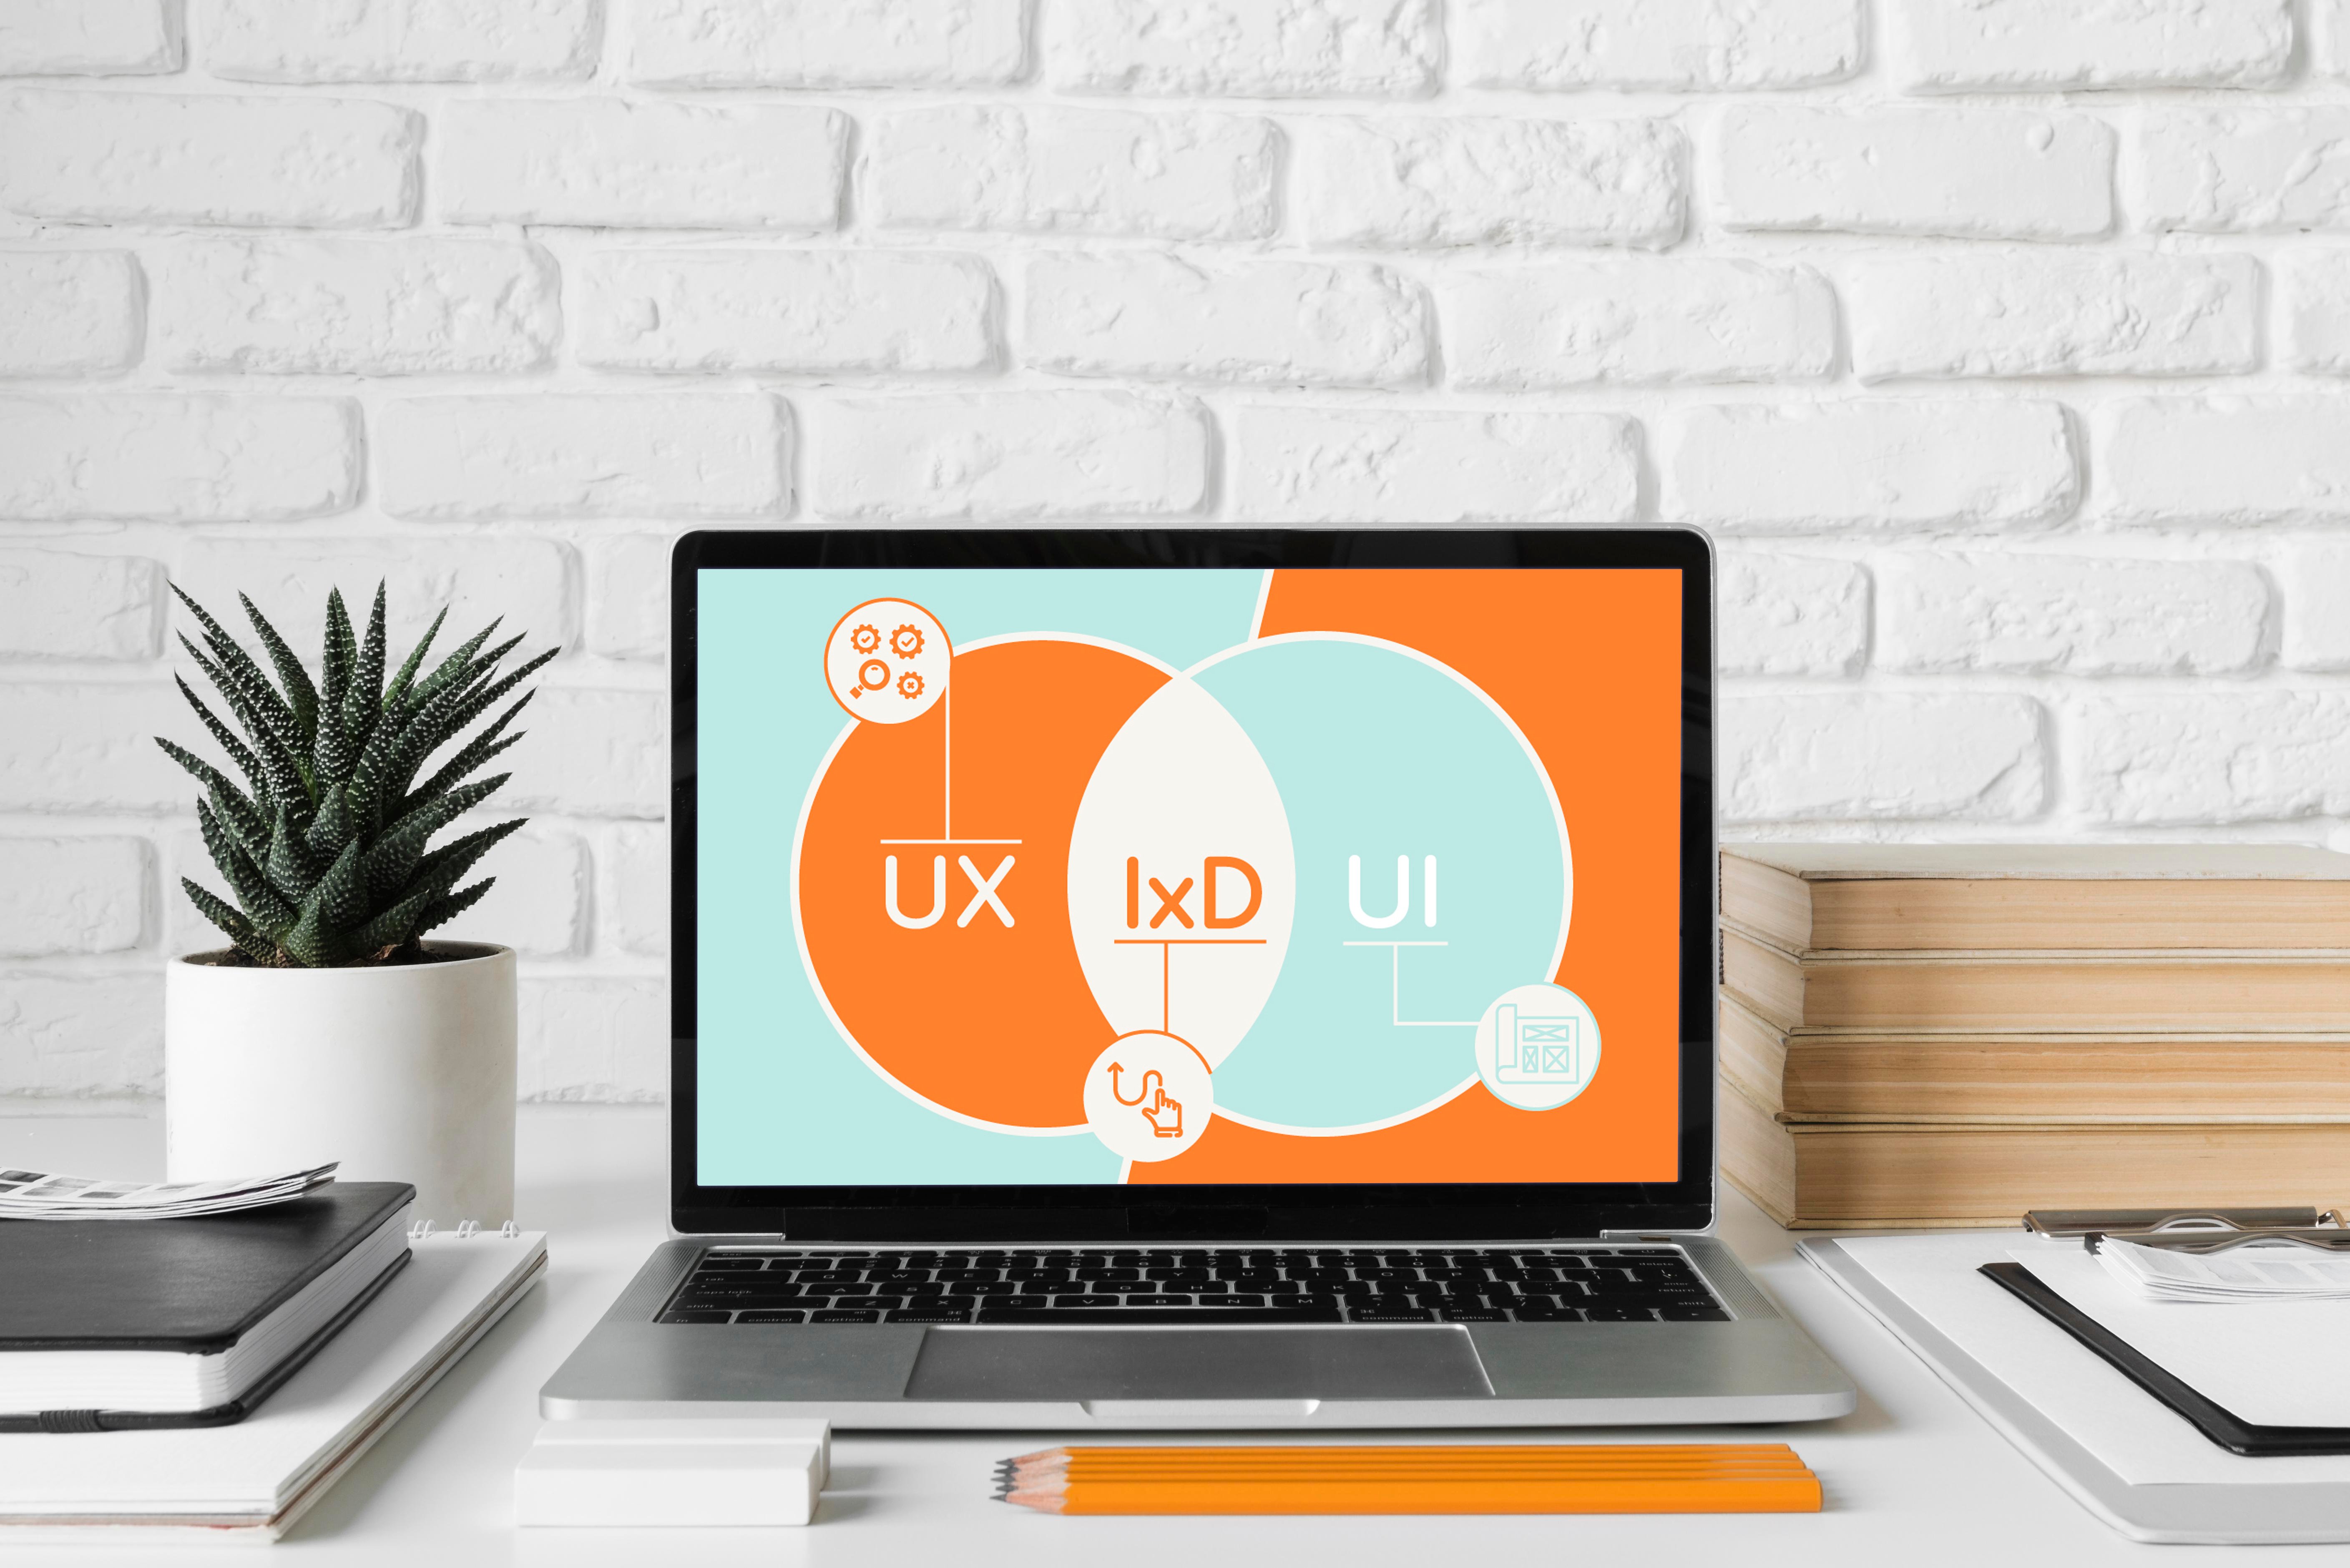 Diseño UX, UI e IxD